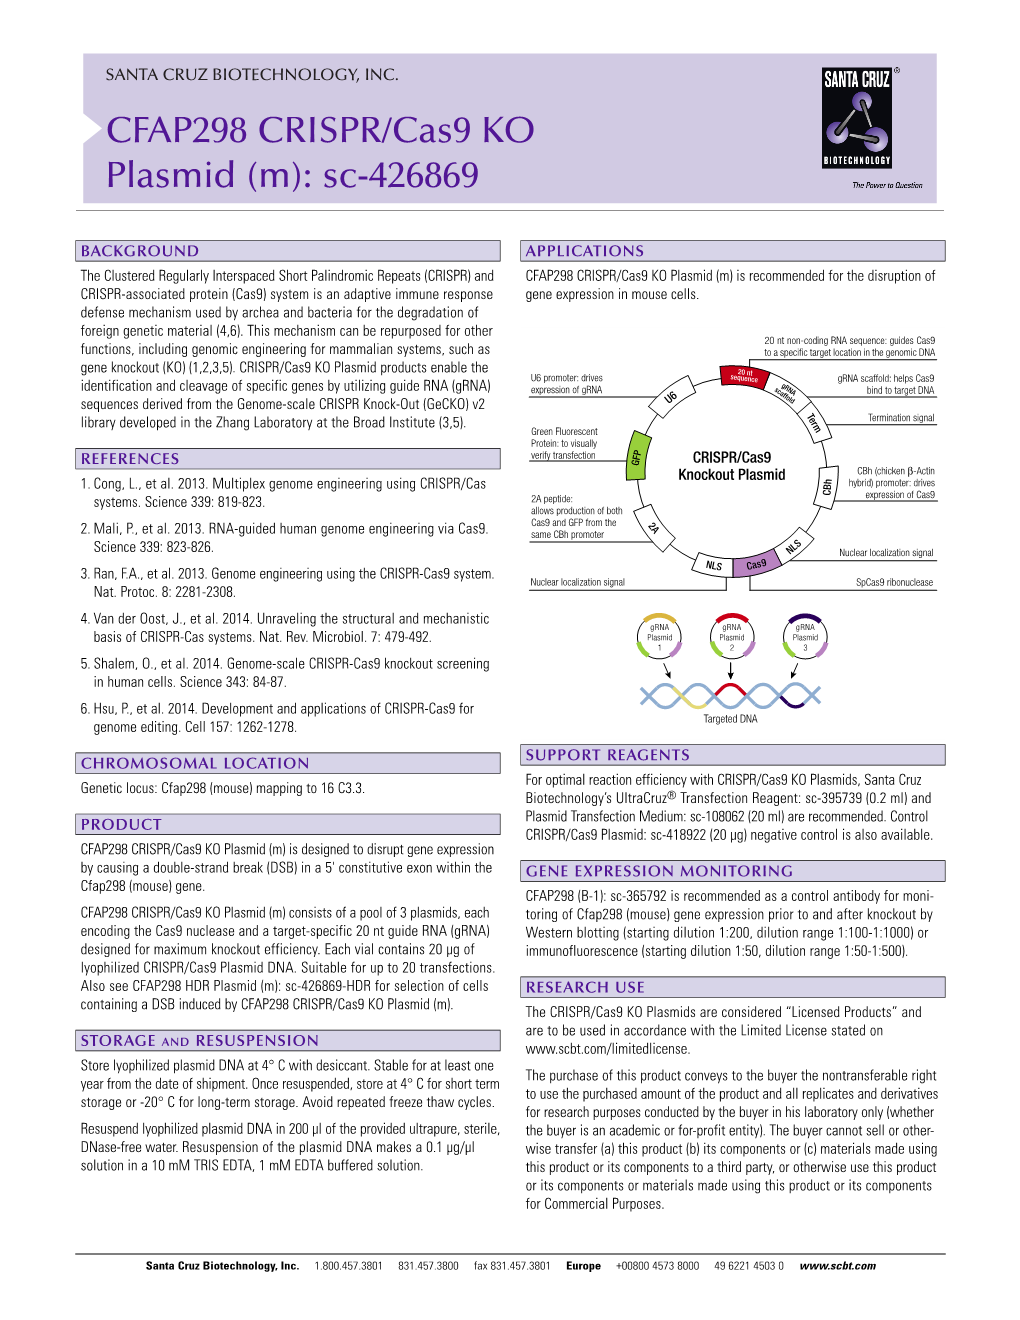 CFAP298 CRISPR/Cas9 KO Plasmid (M): Sc-426869